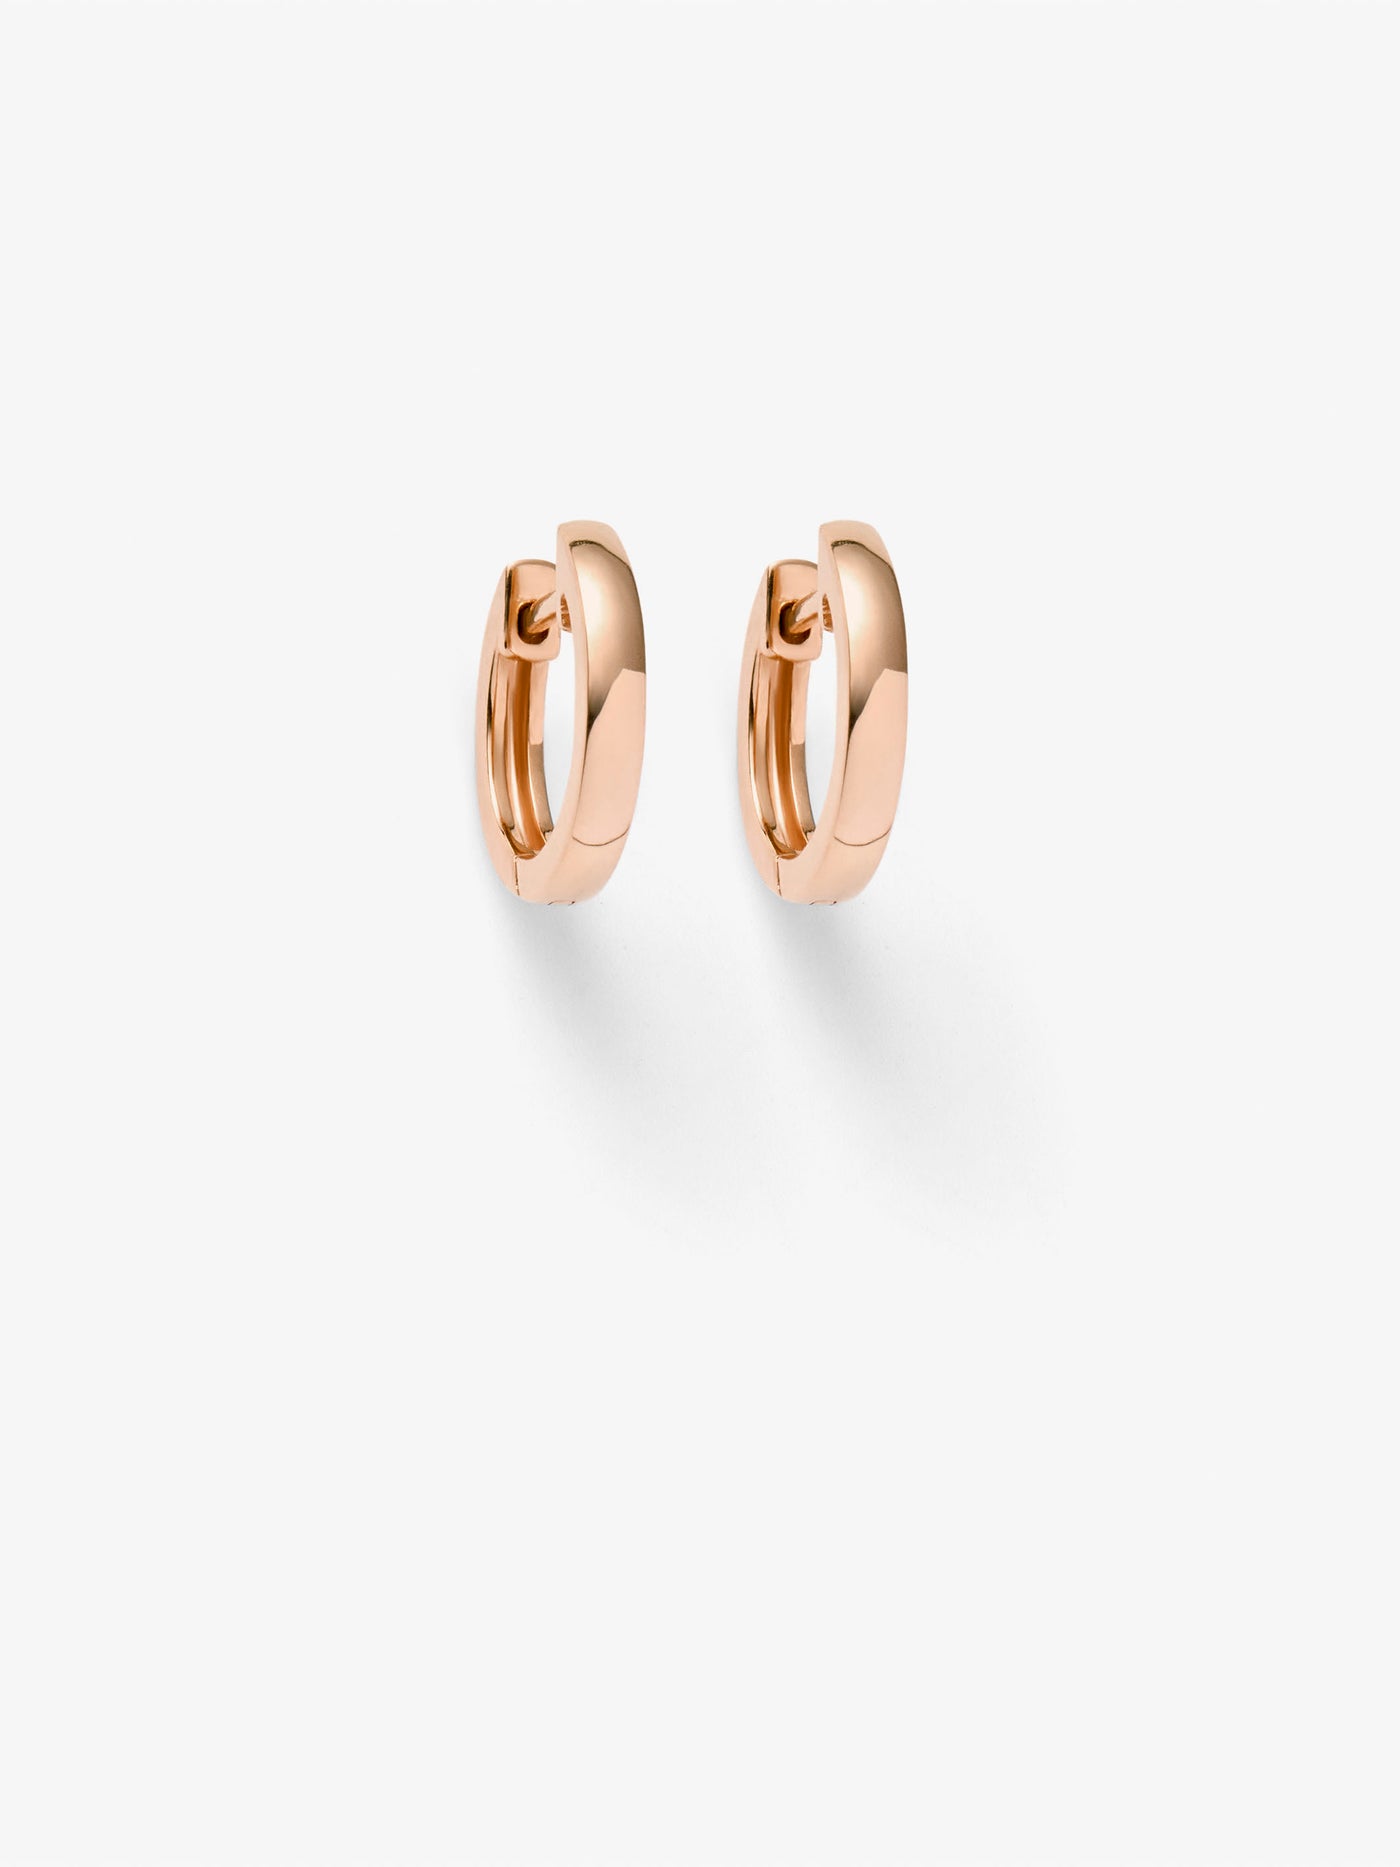 Huggie Earrings in 18k Rose Gold